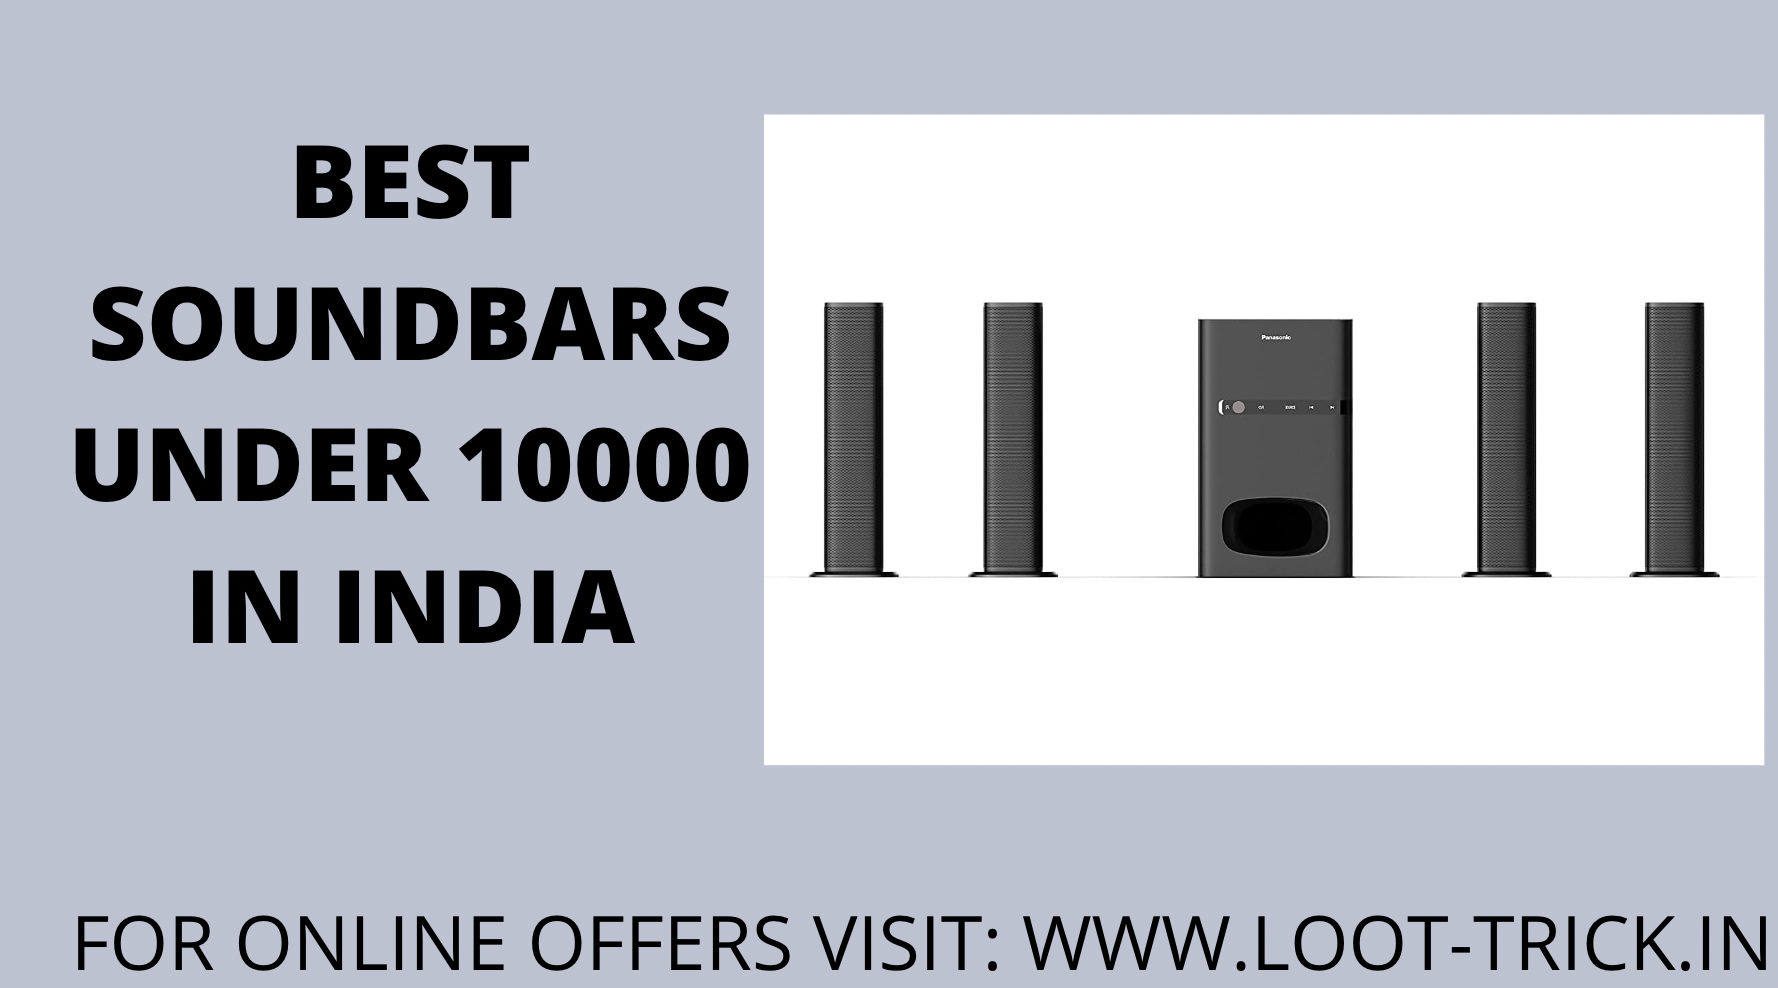 BEST SOUNDBARS UNDER 10000 IN INDIA